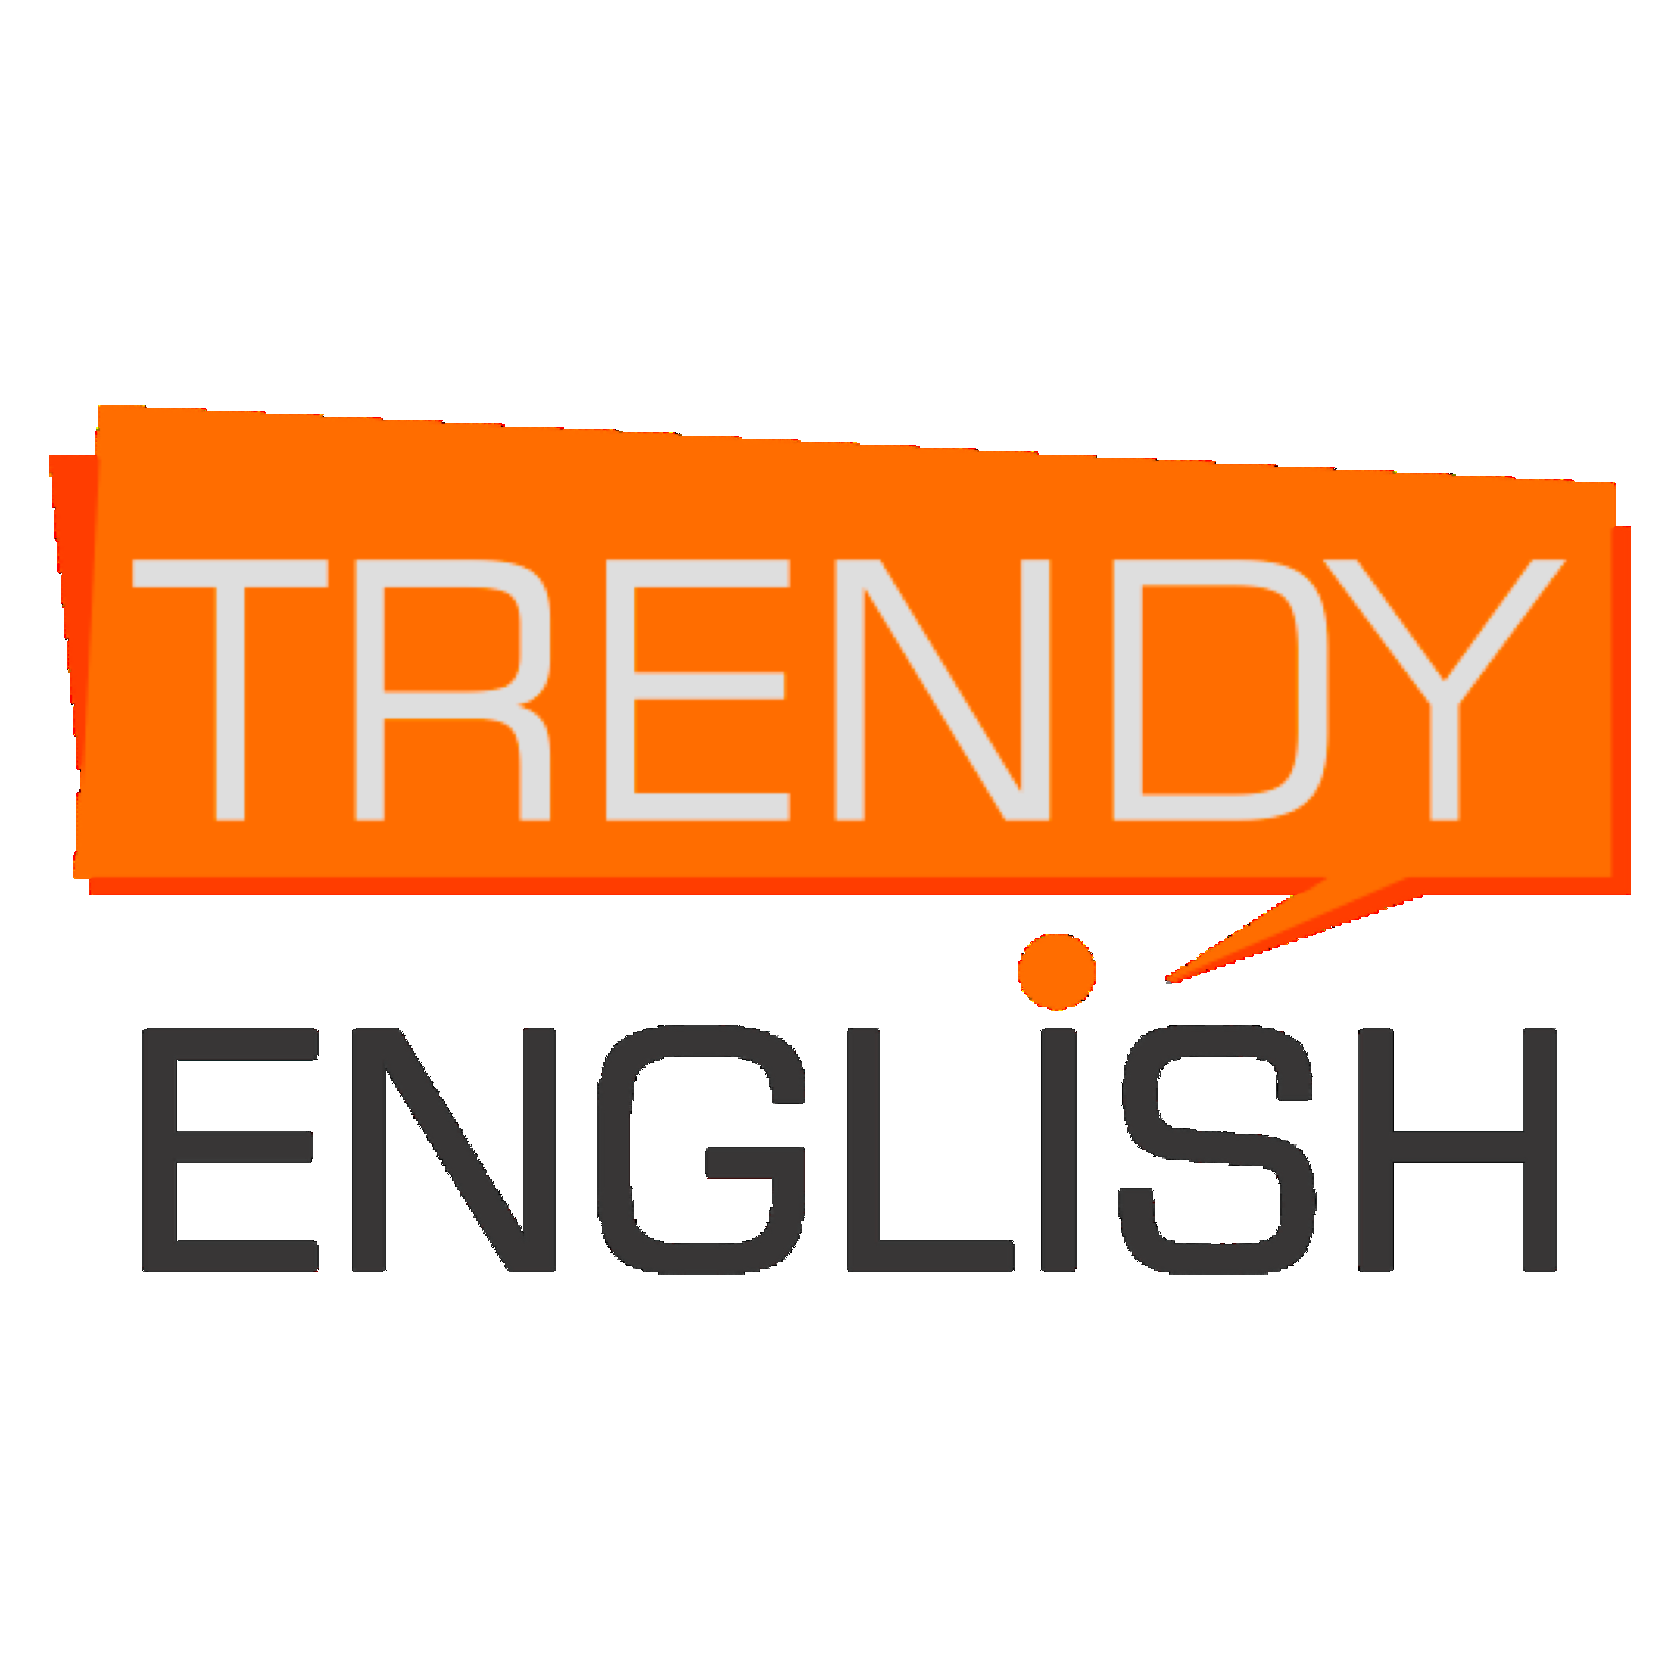 Trendy English